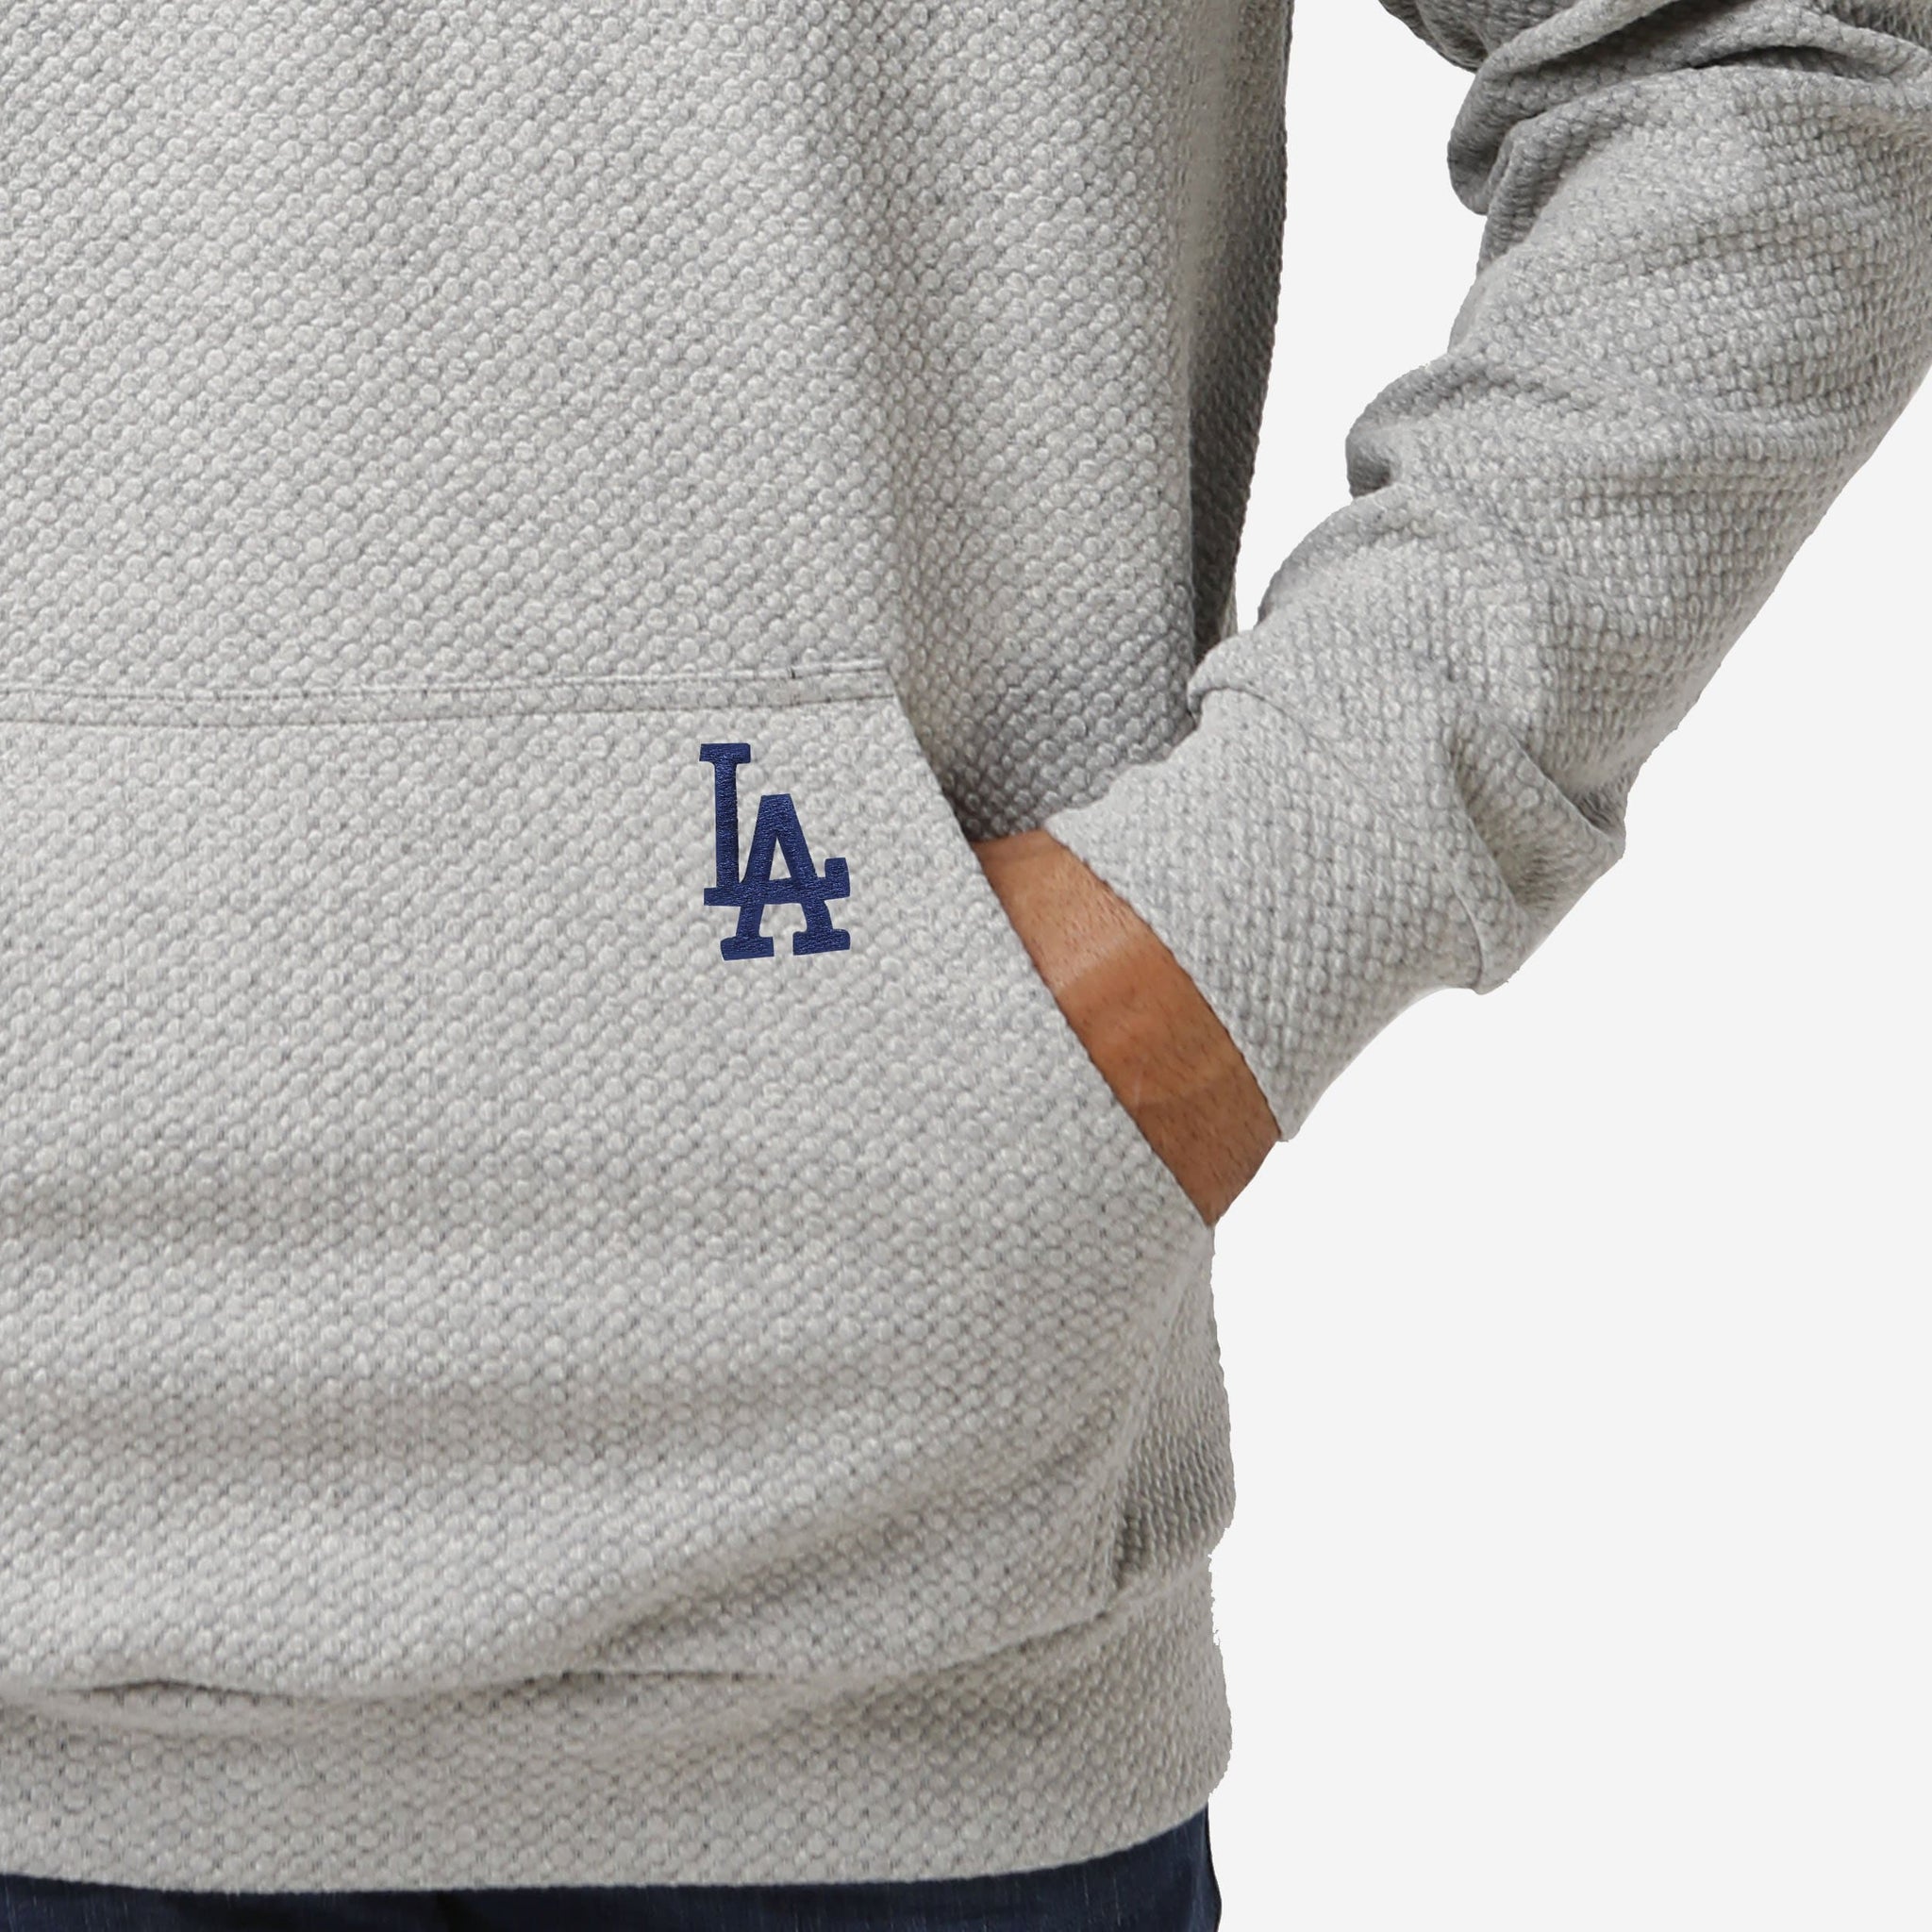 New Era Los Angeles Dodgers MLB Grey Crew Neck Sweatshirt